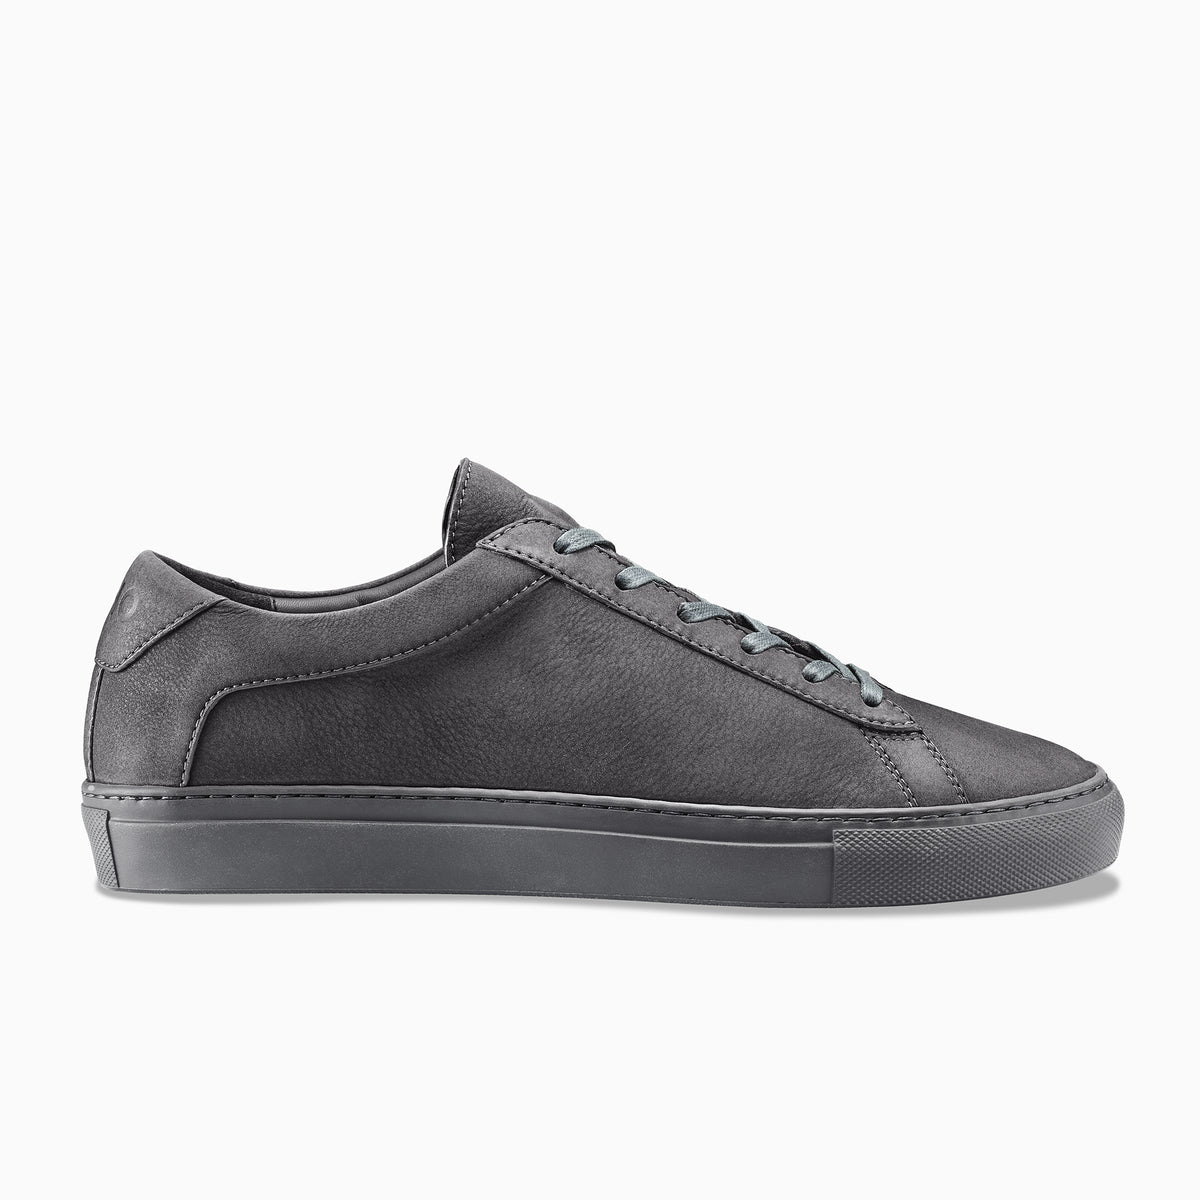 Men's Low Top Nubuck Sneaker in Dark Grey | Capri Charcoal | KOIO